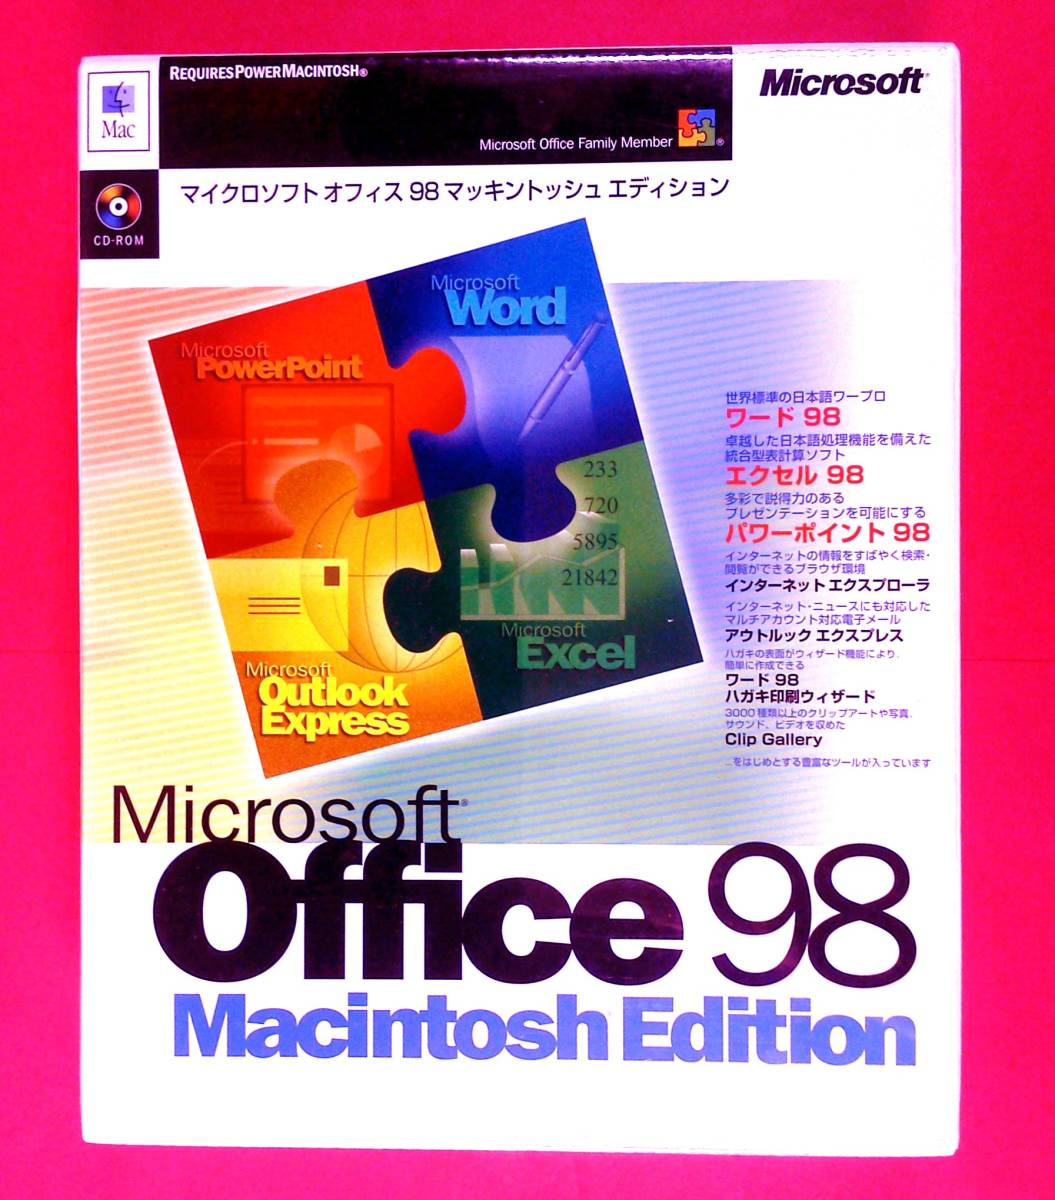 【356】Microsoft Office 98 Machintosh版 新品 マッキントッシュ用オフィス 未開封品 PowerPointパワーポイント Wordワード Excelエクセル